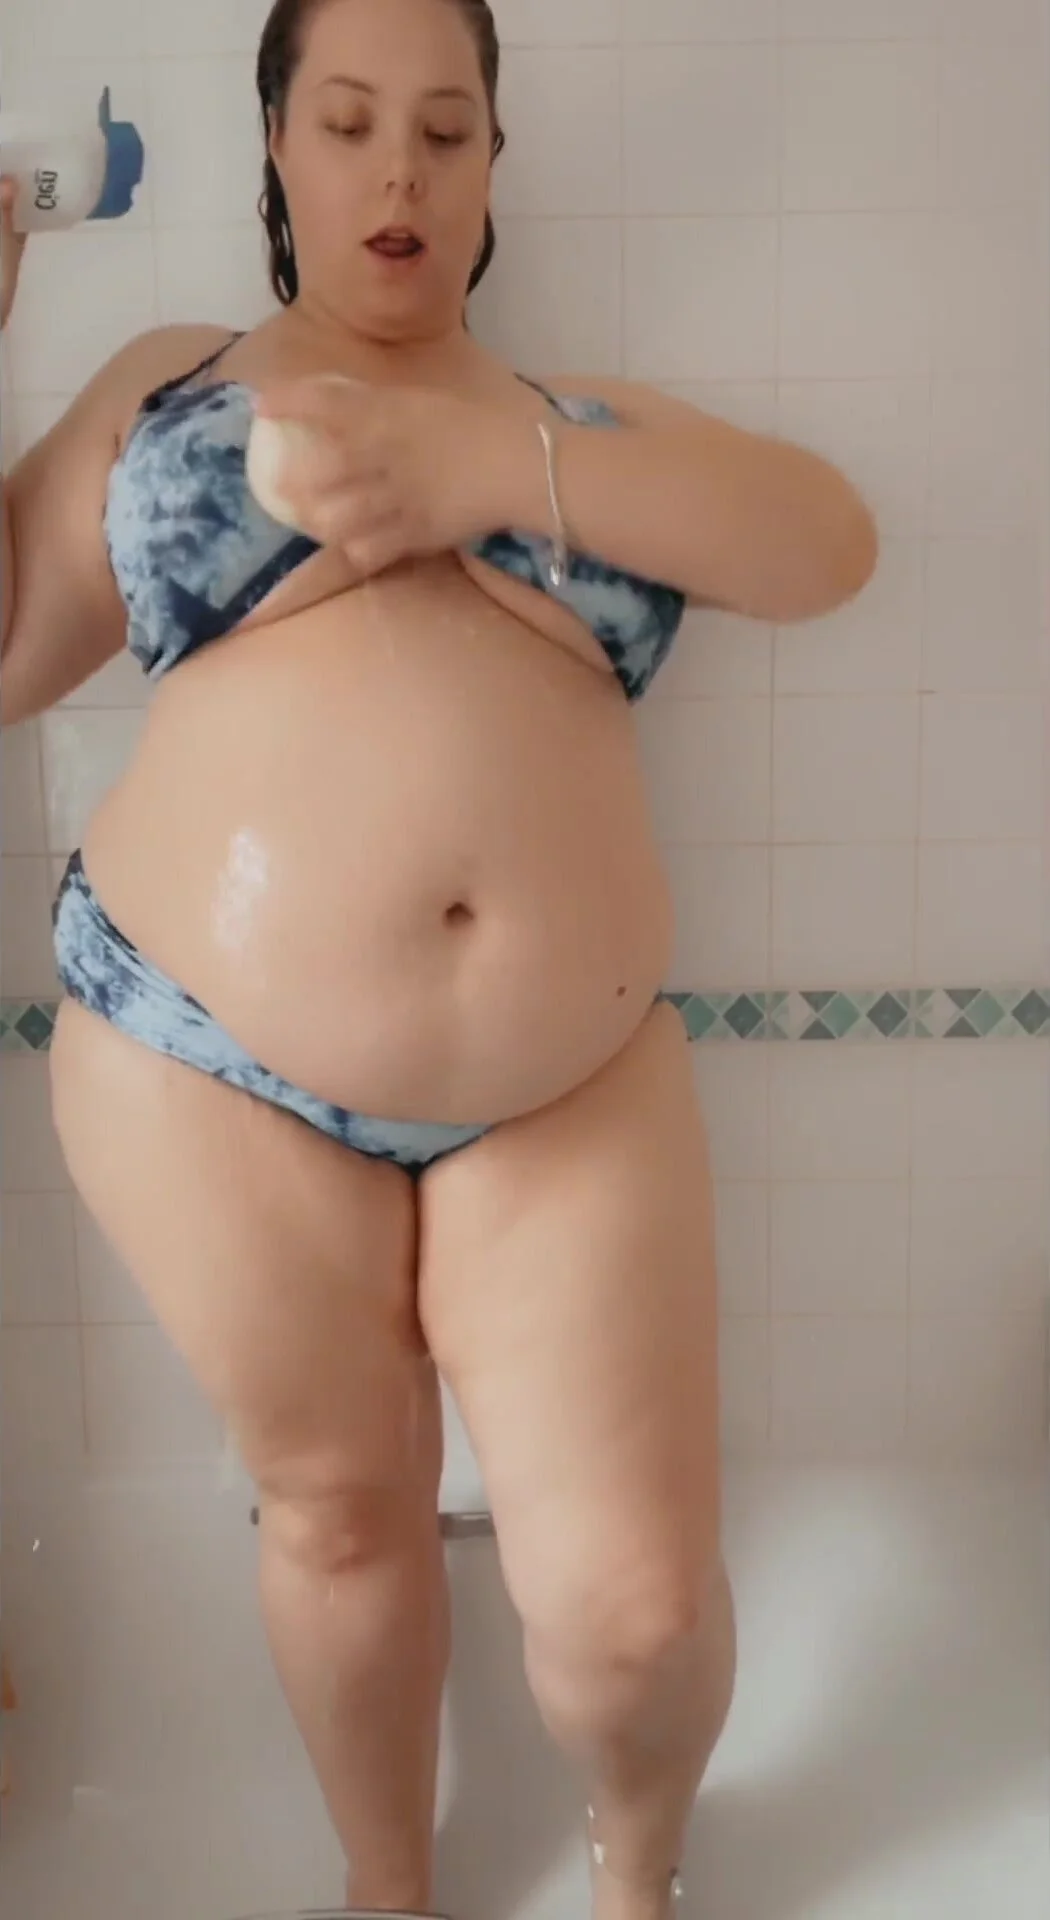 Fat girl , fat body fat ass , fatbelly - ThisVid.com